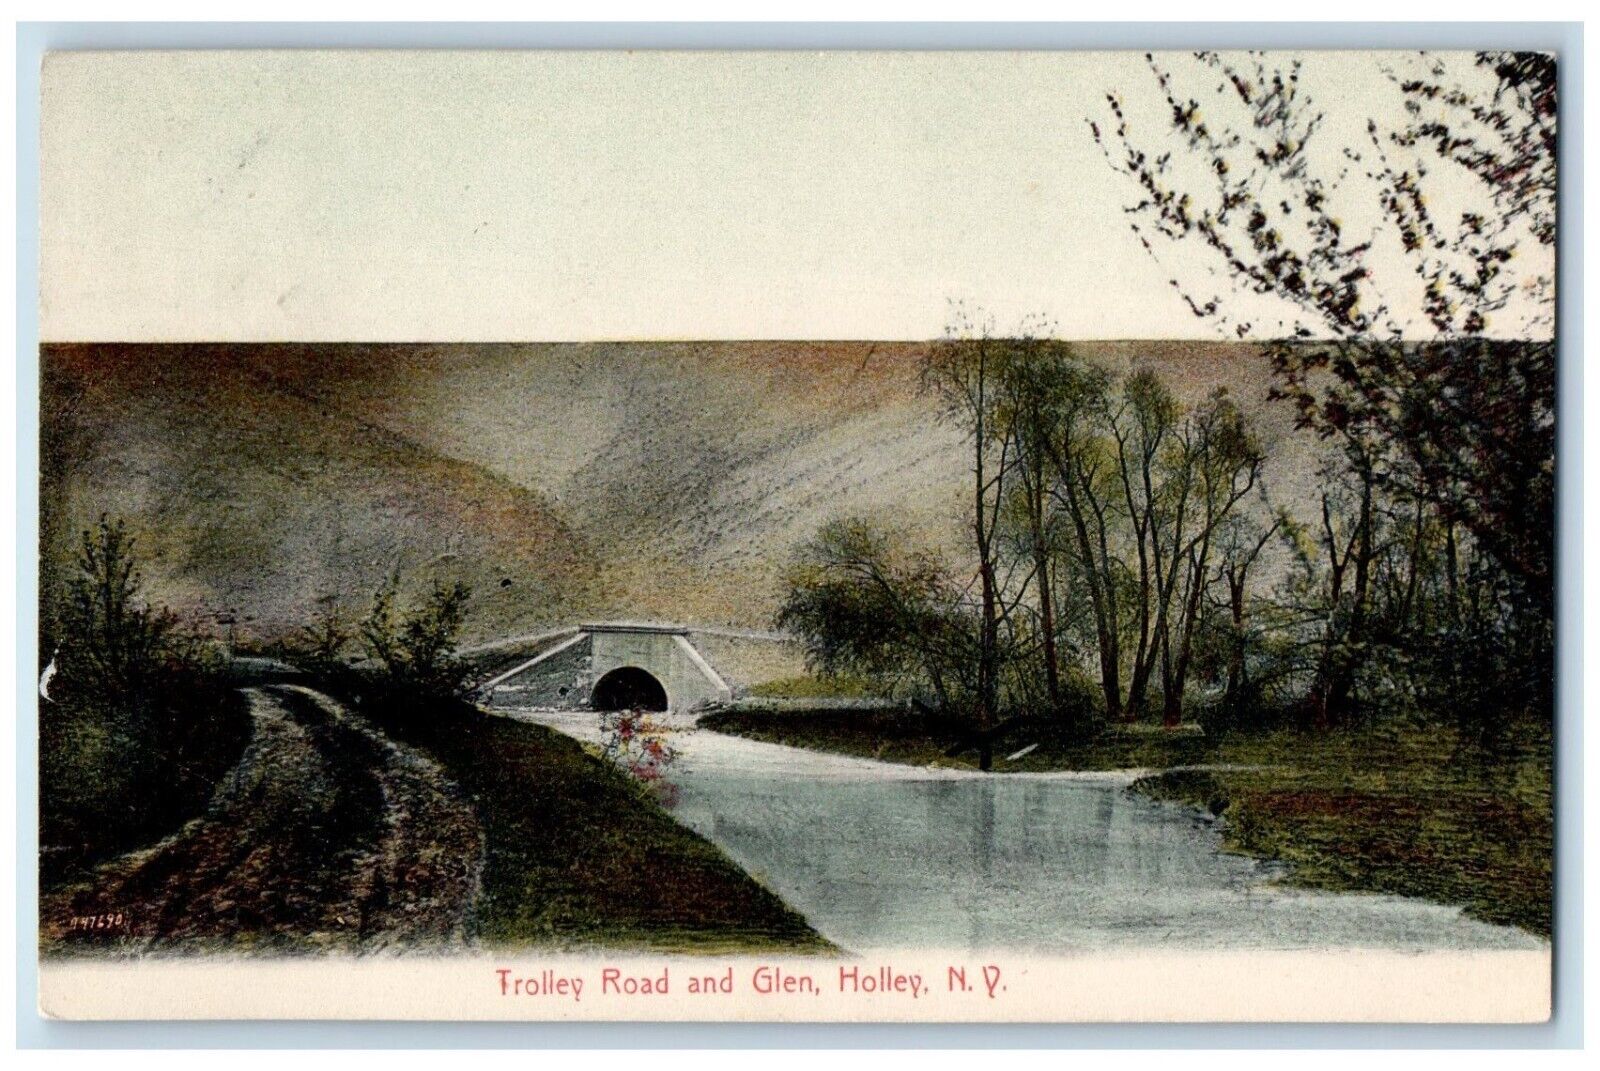 1908 Trolley Road Tunnel Creek Glen Holley New York NY Vintage Antique Postcard